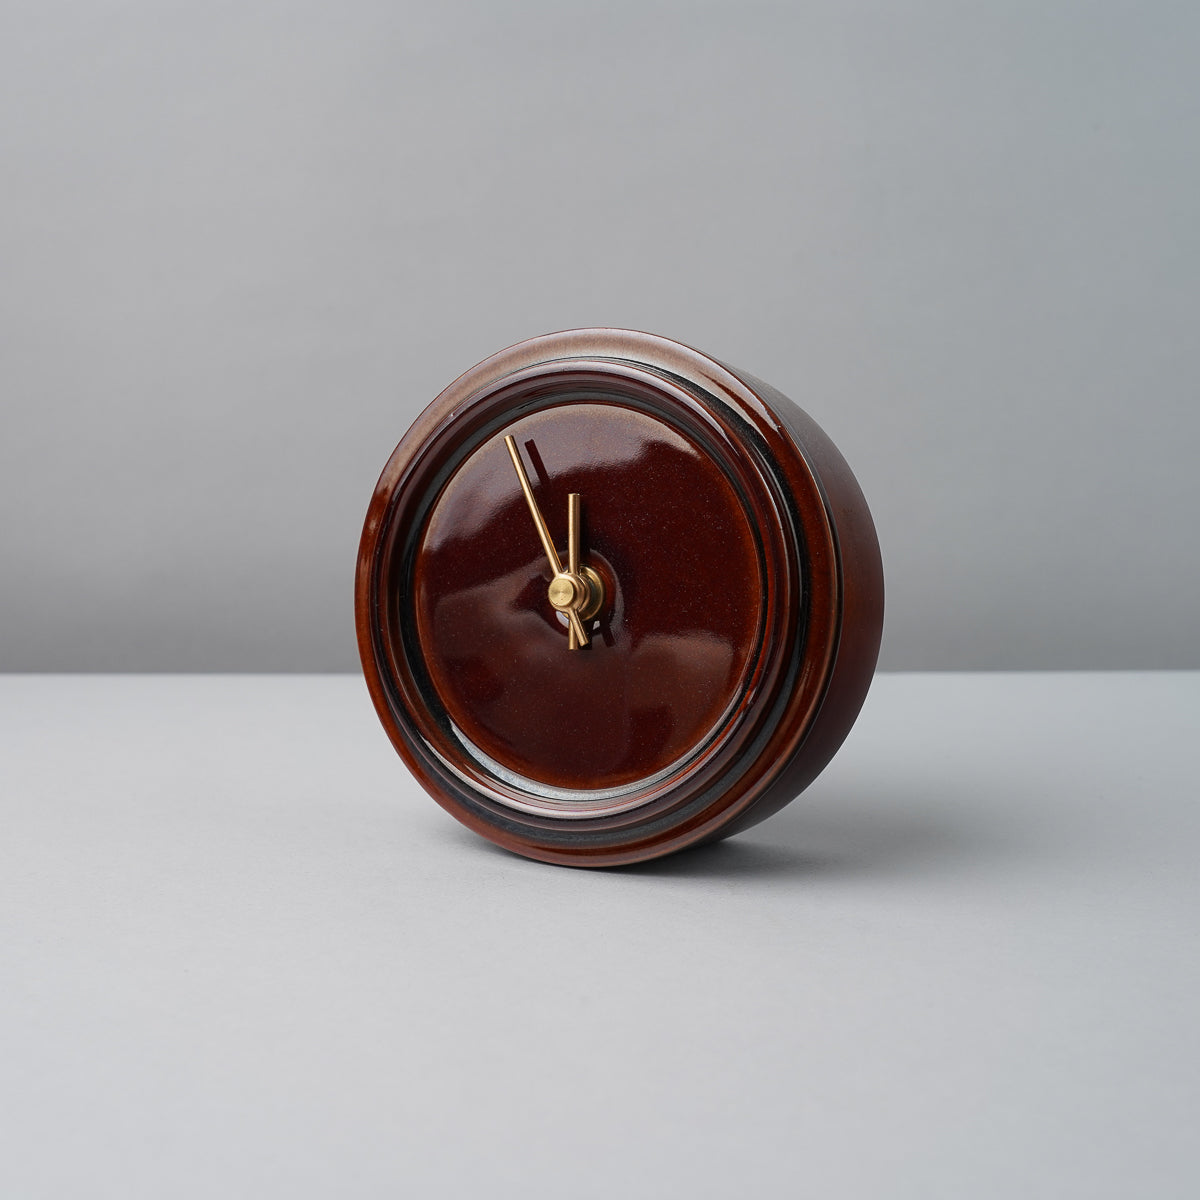 美濃焼 TILE WOOD CLOCK 陶器時計 置き時計 電池付 飴釉(WZ-03) SUGY Studio1156